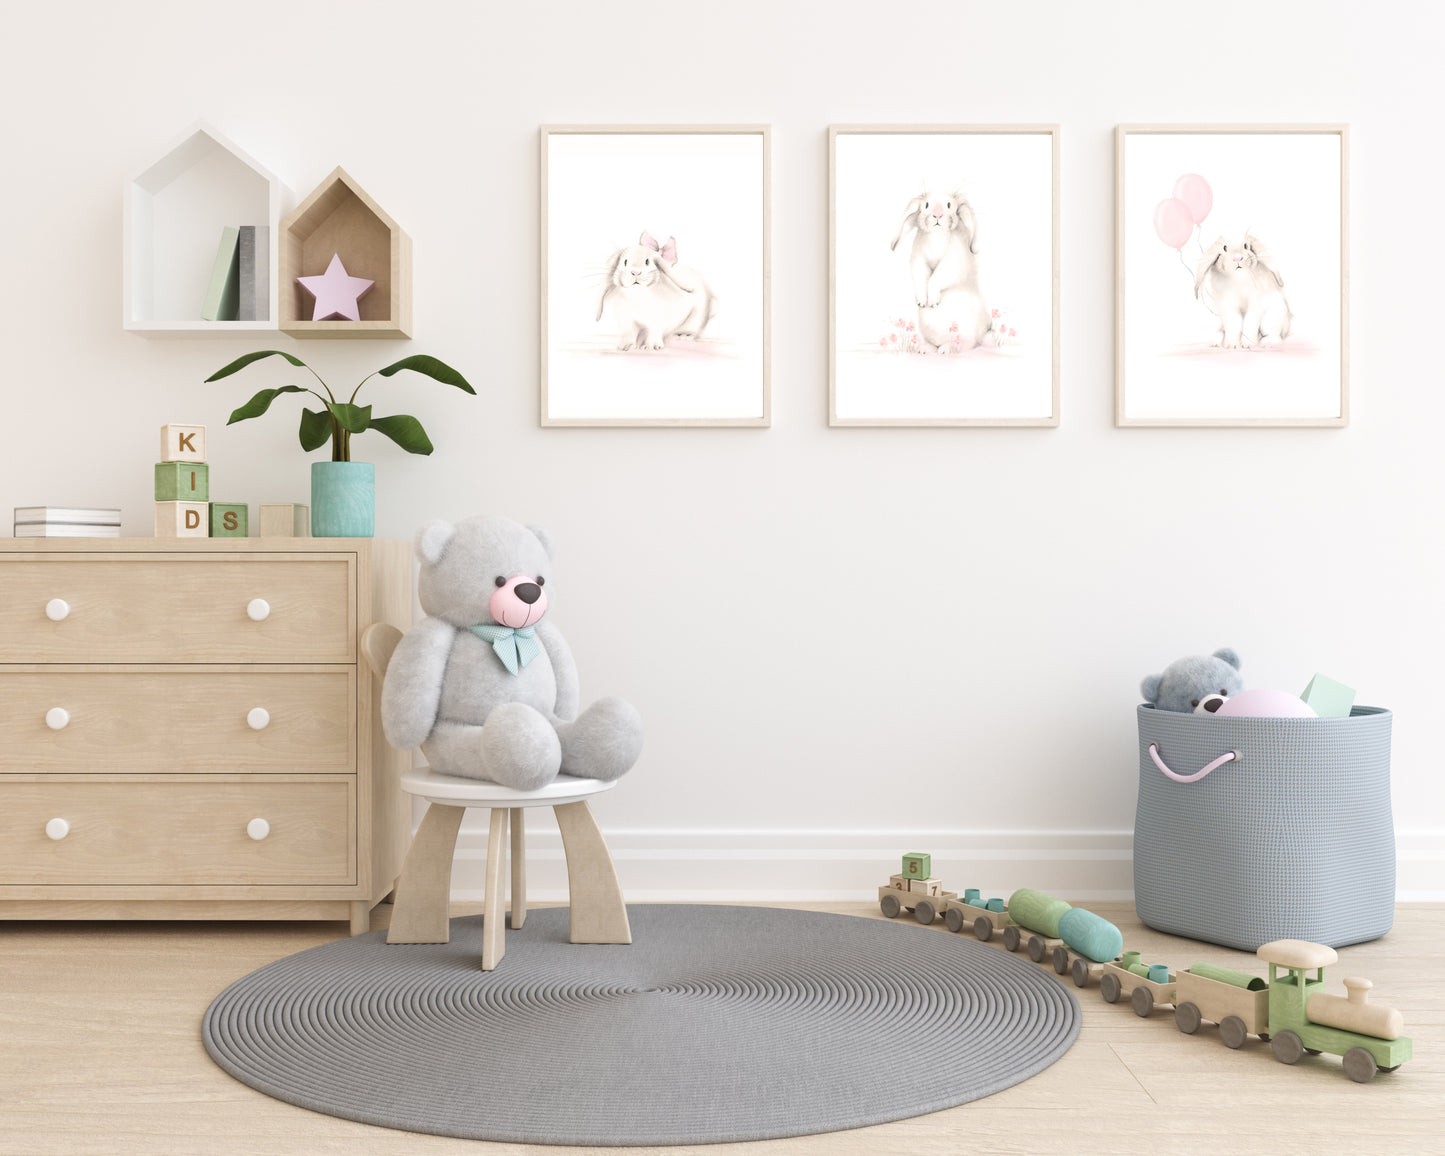 Bunny Nursery Art Prints - Sweet Blush - Set of 3